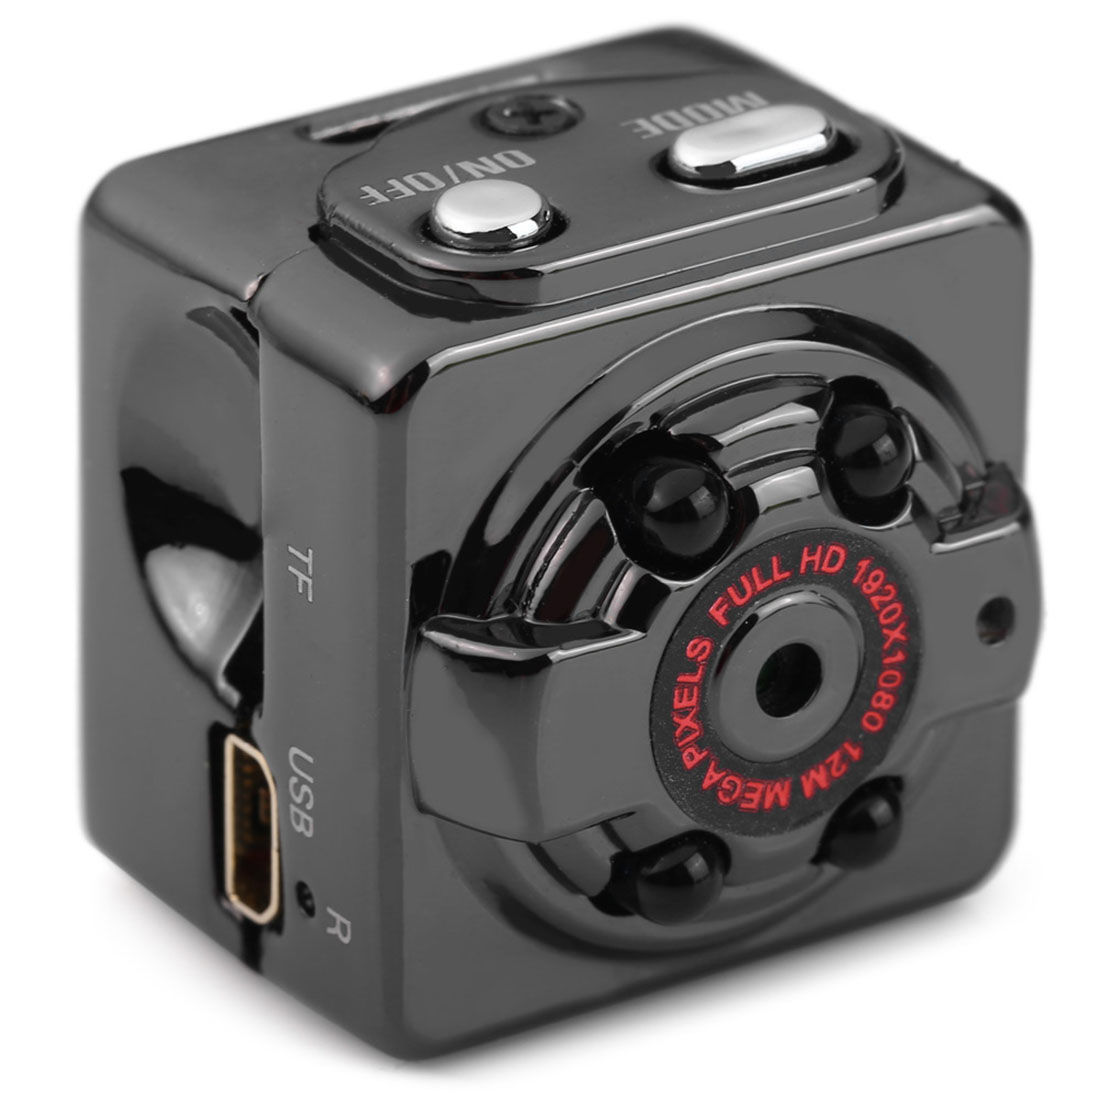 

Dewtreetali SQ8 Ultra Mini Car DVR 1080P Full HD Class 10 Video Recorder DV Camera Motion Detection Camcorder Car DVR camera